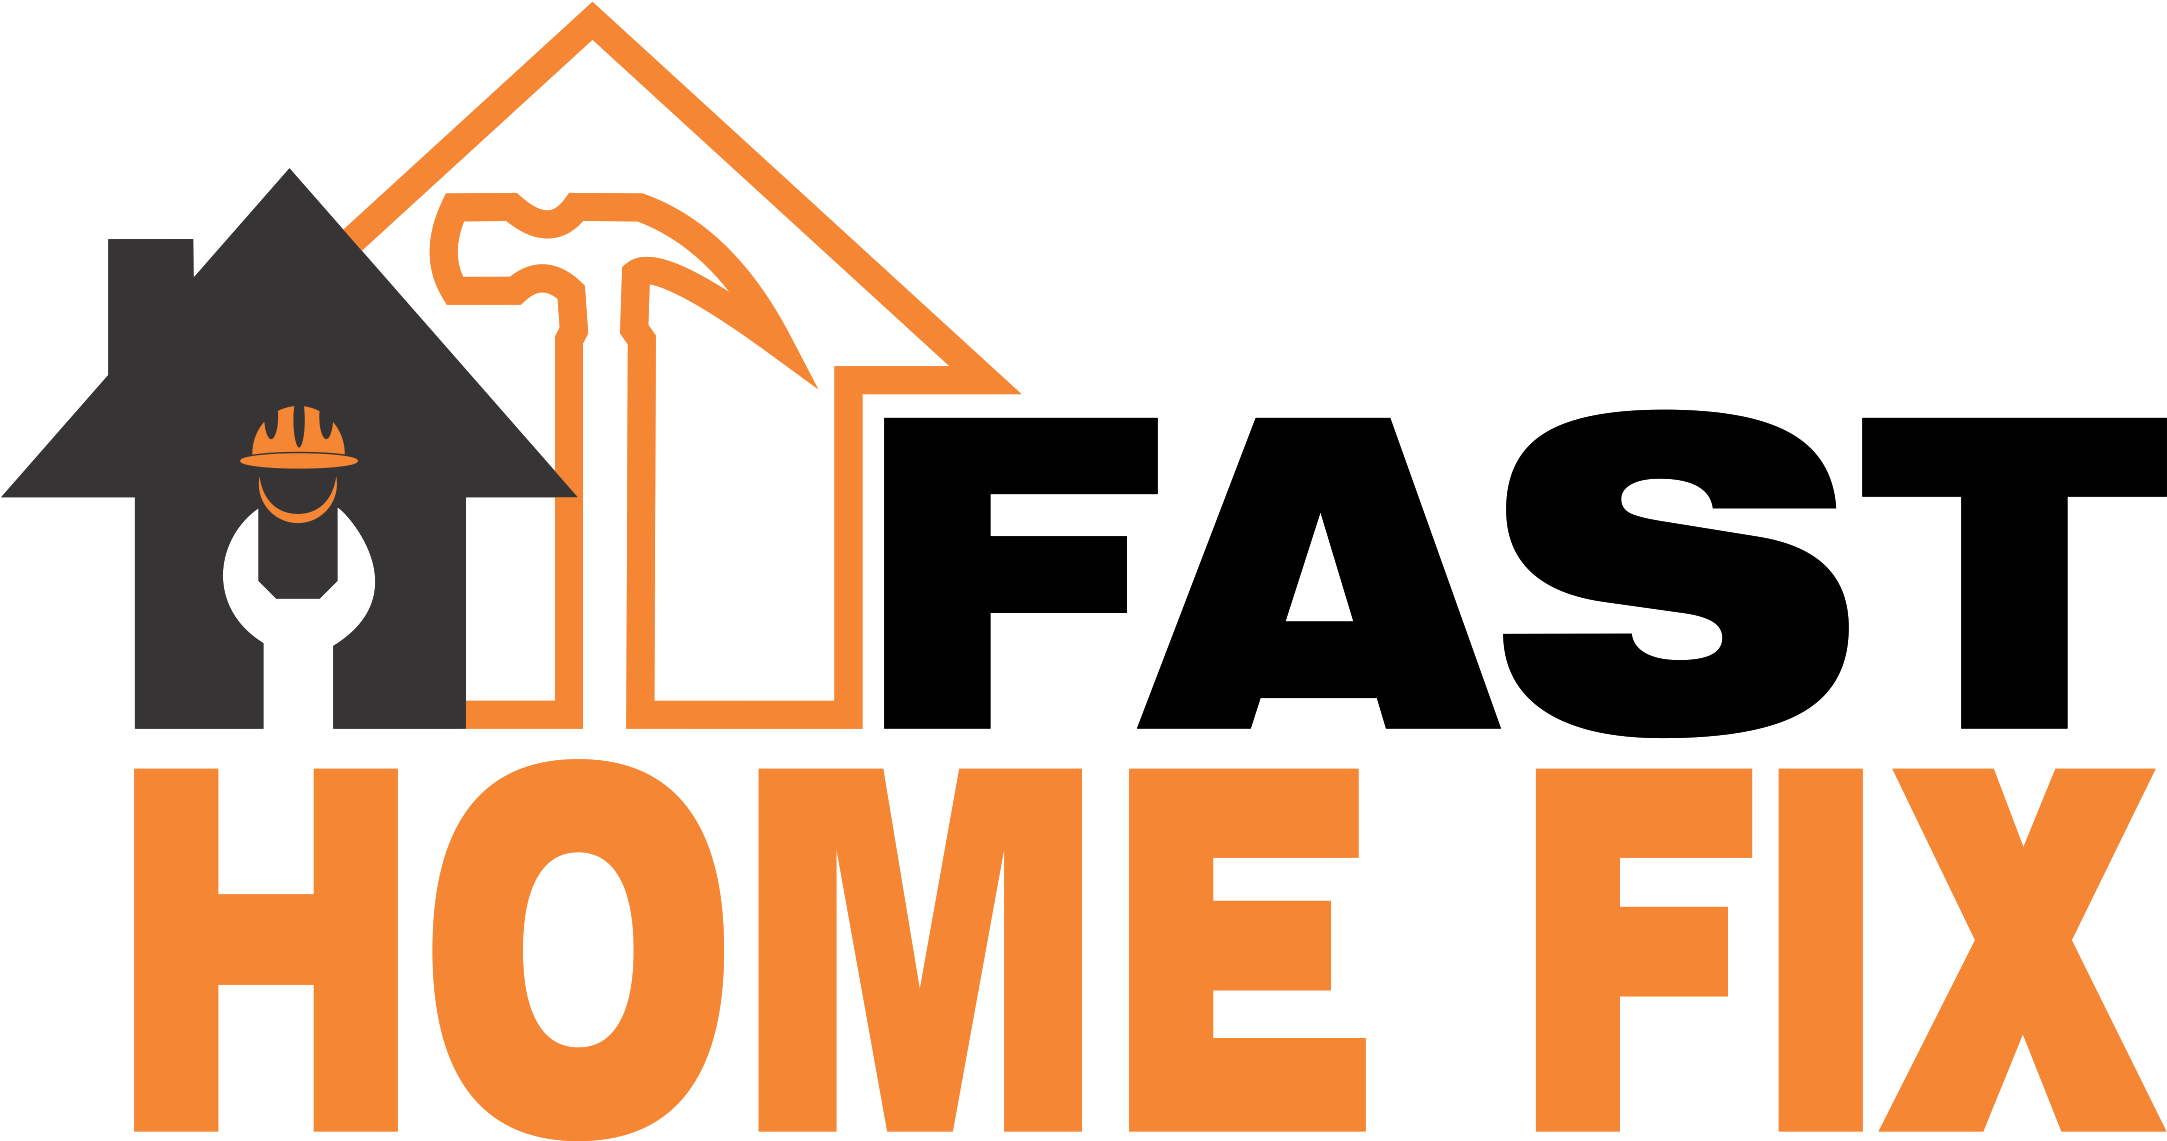 Fast Home Fix - Logo For Handyman Business (2166x1154)